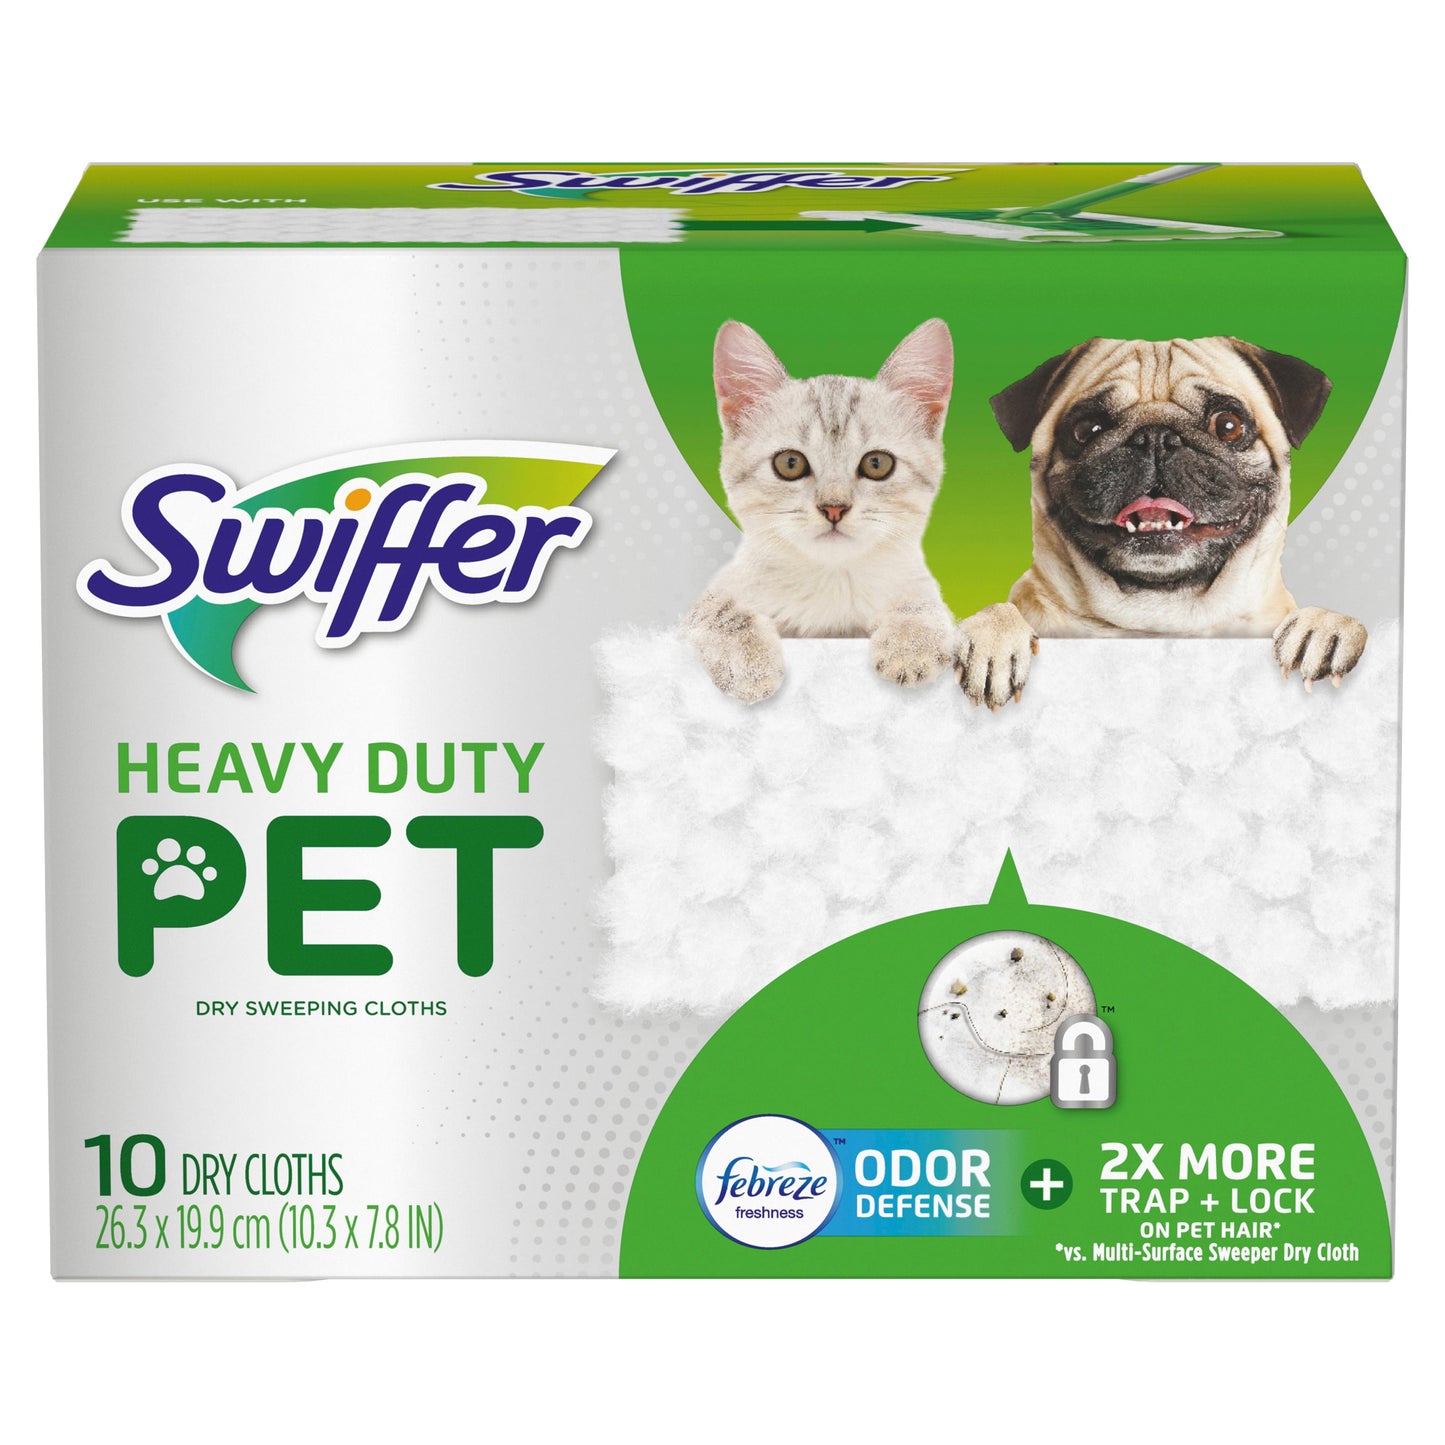 Swiffer Heavy Duty Pet Dry Sweeping Cloth Refills Febreze Odor Defense - 10ct/4pk